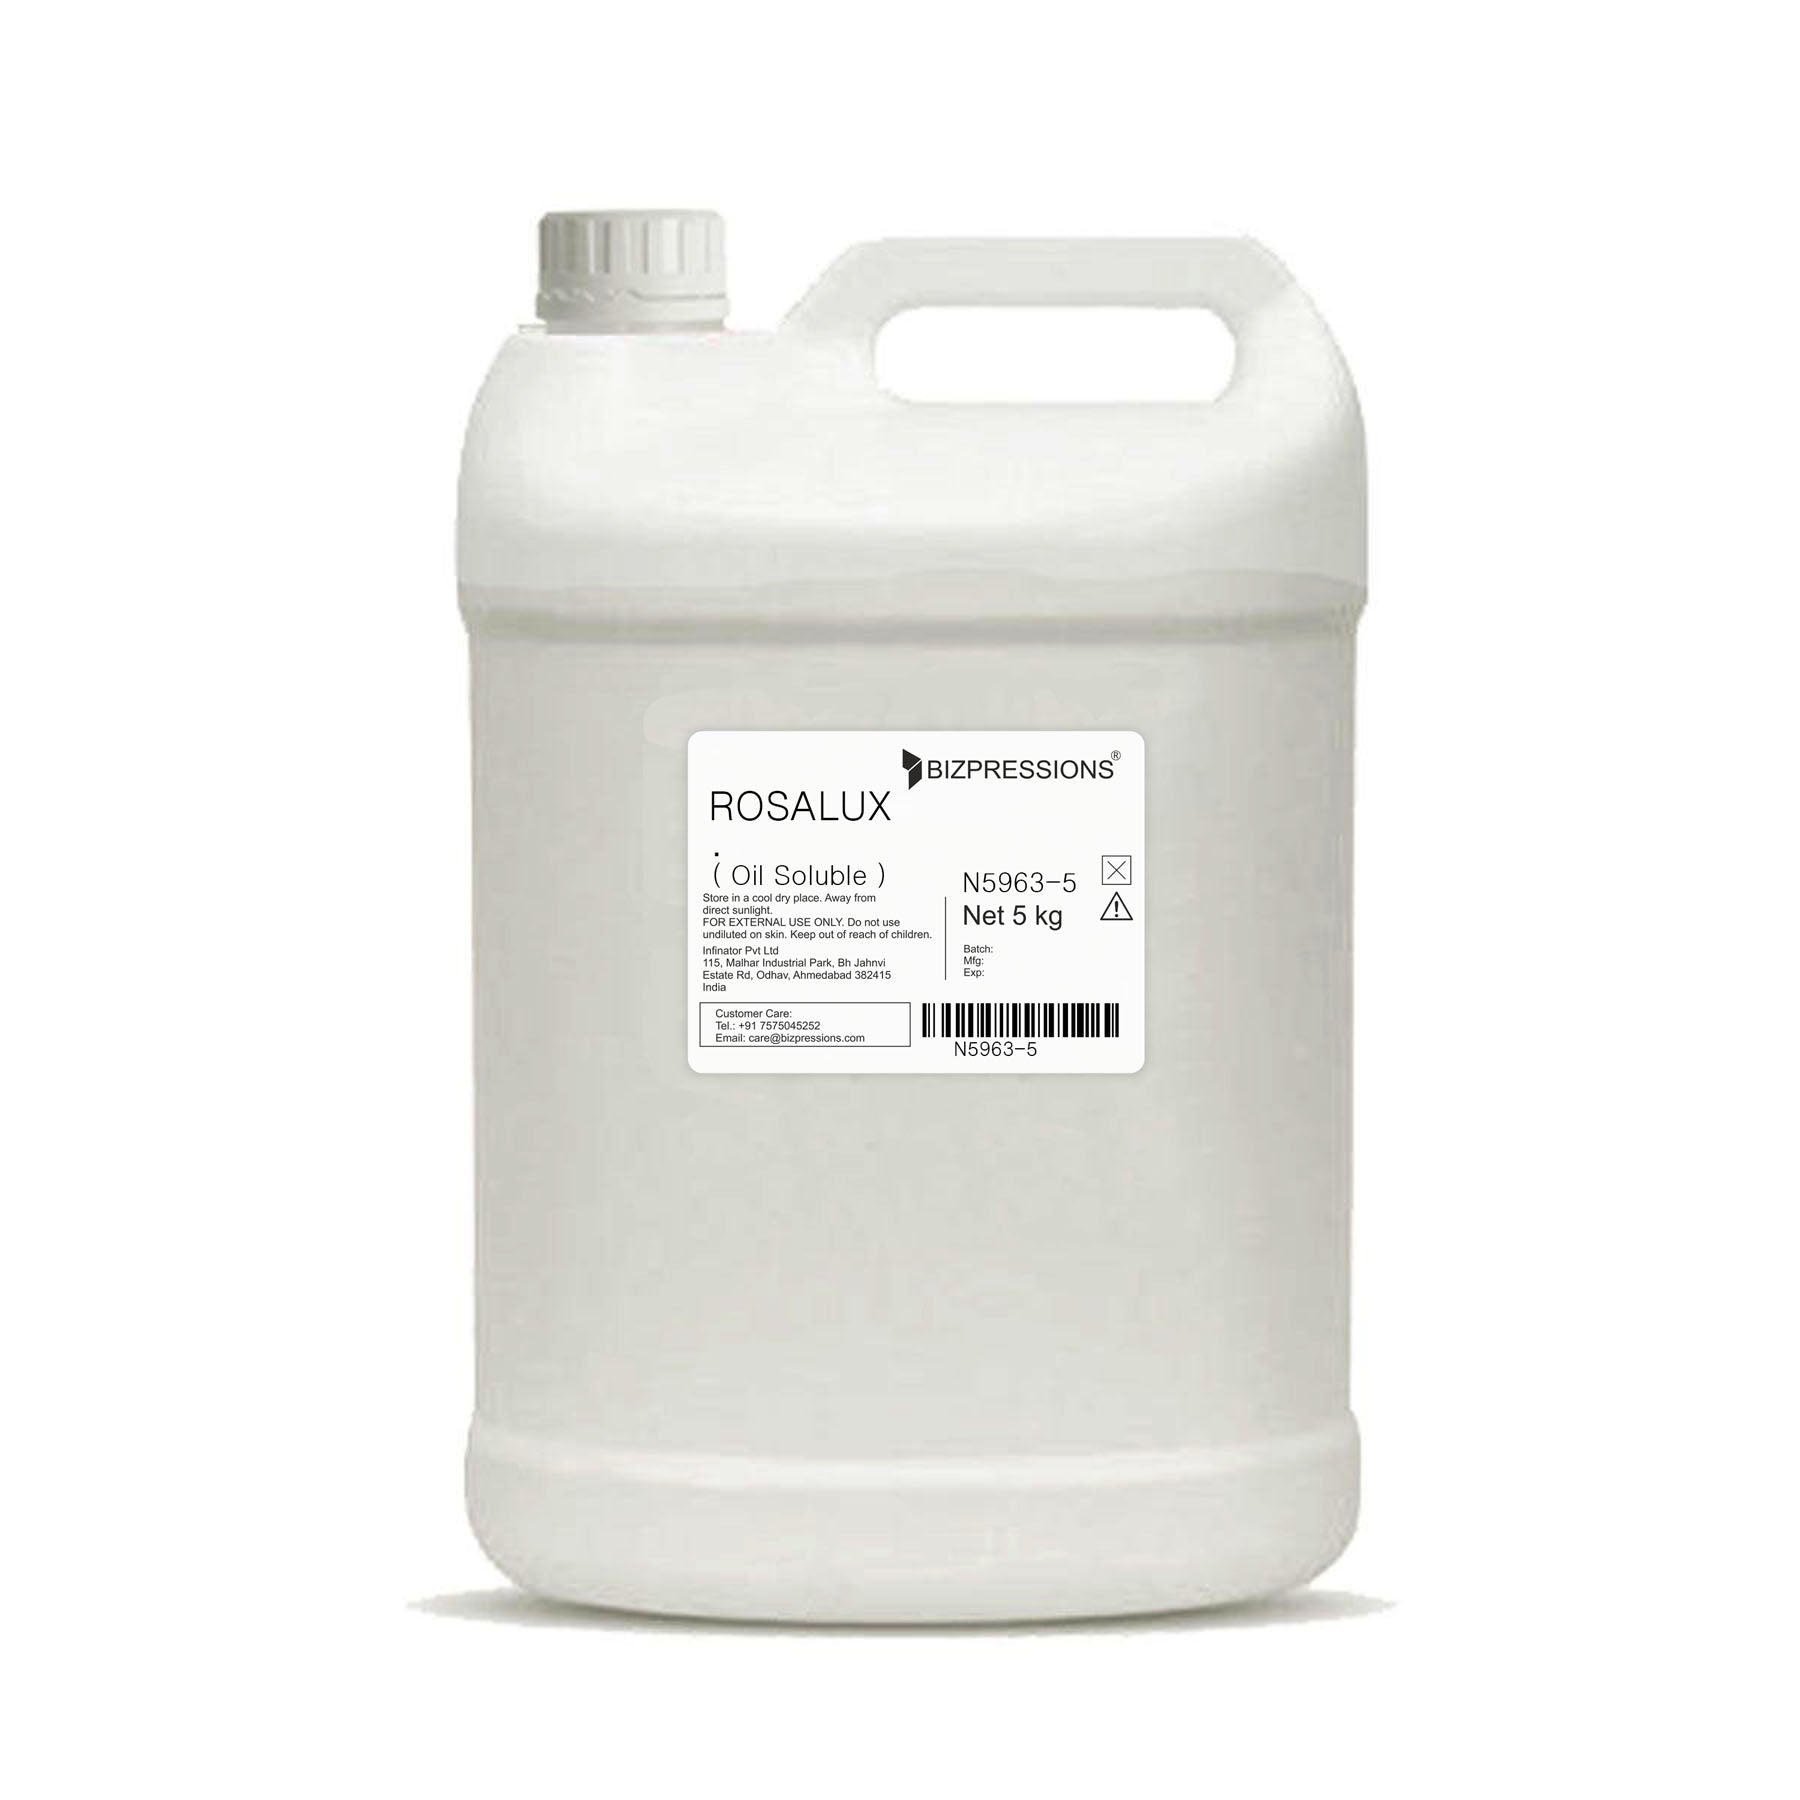 ROSALUX - Fragrance ( Oil Soluble ) - 5 kg